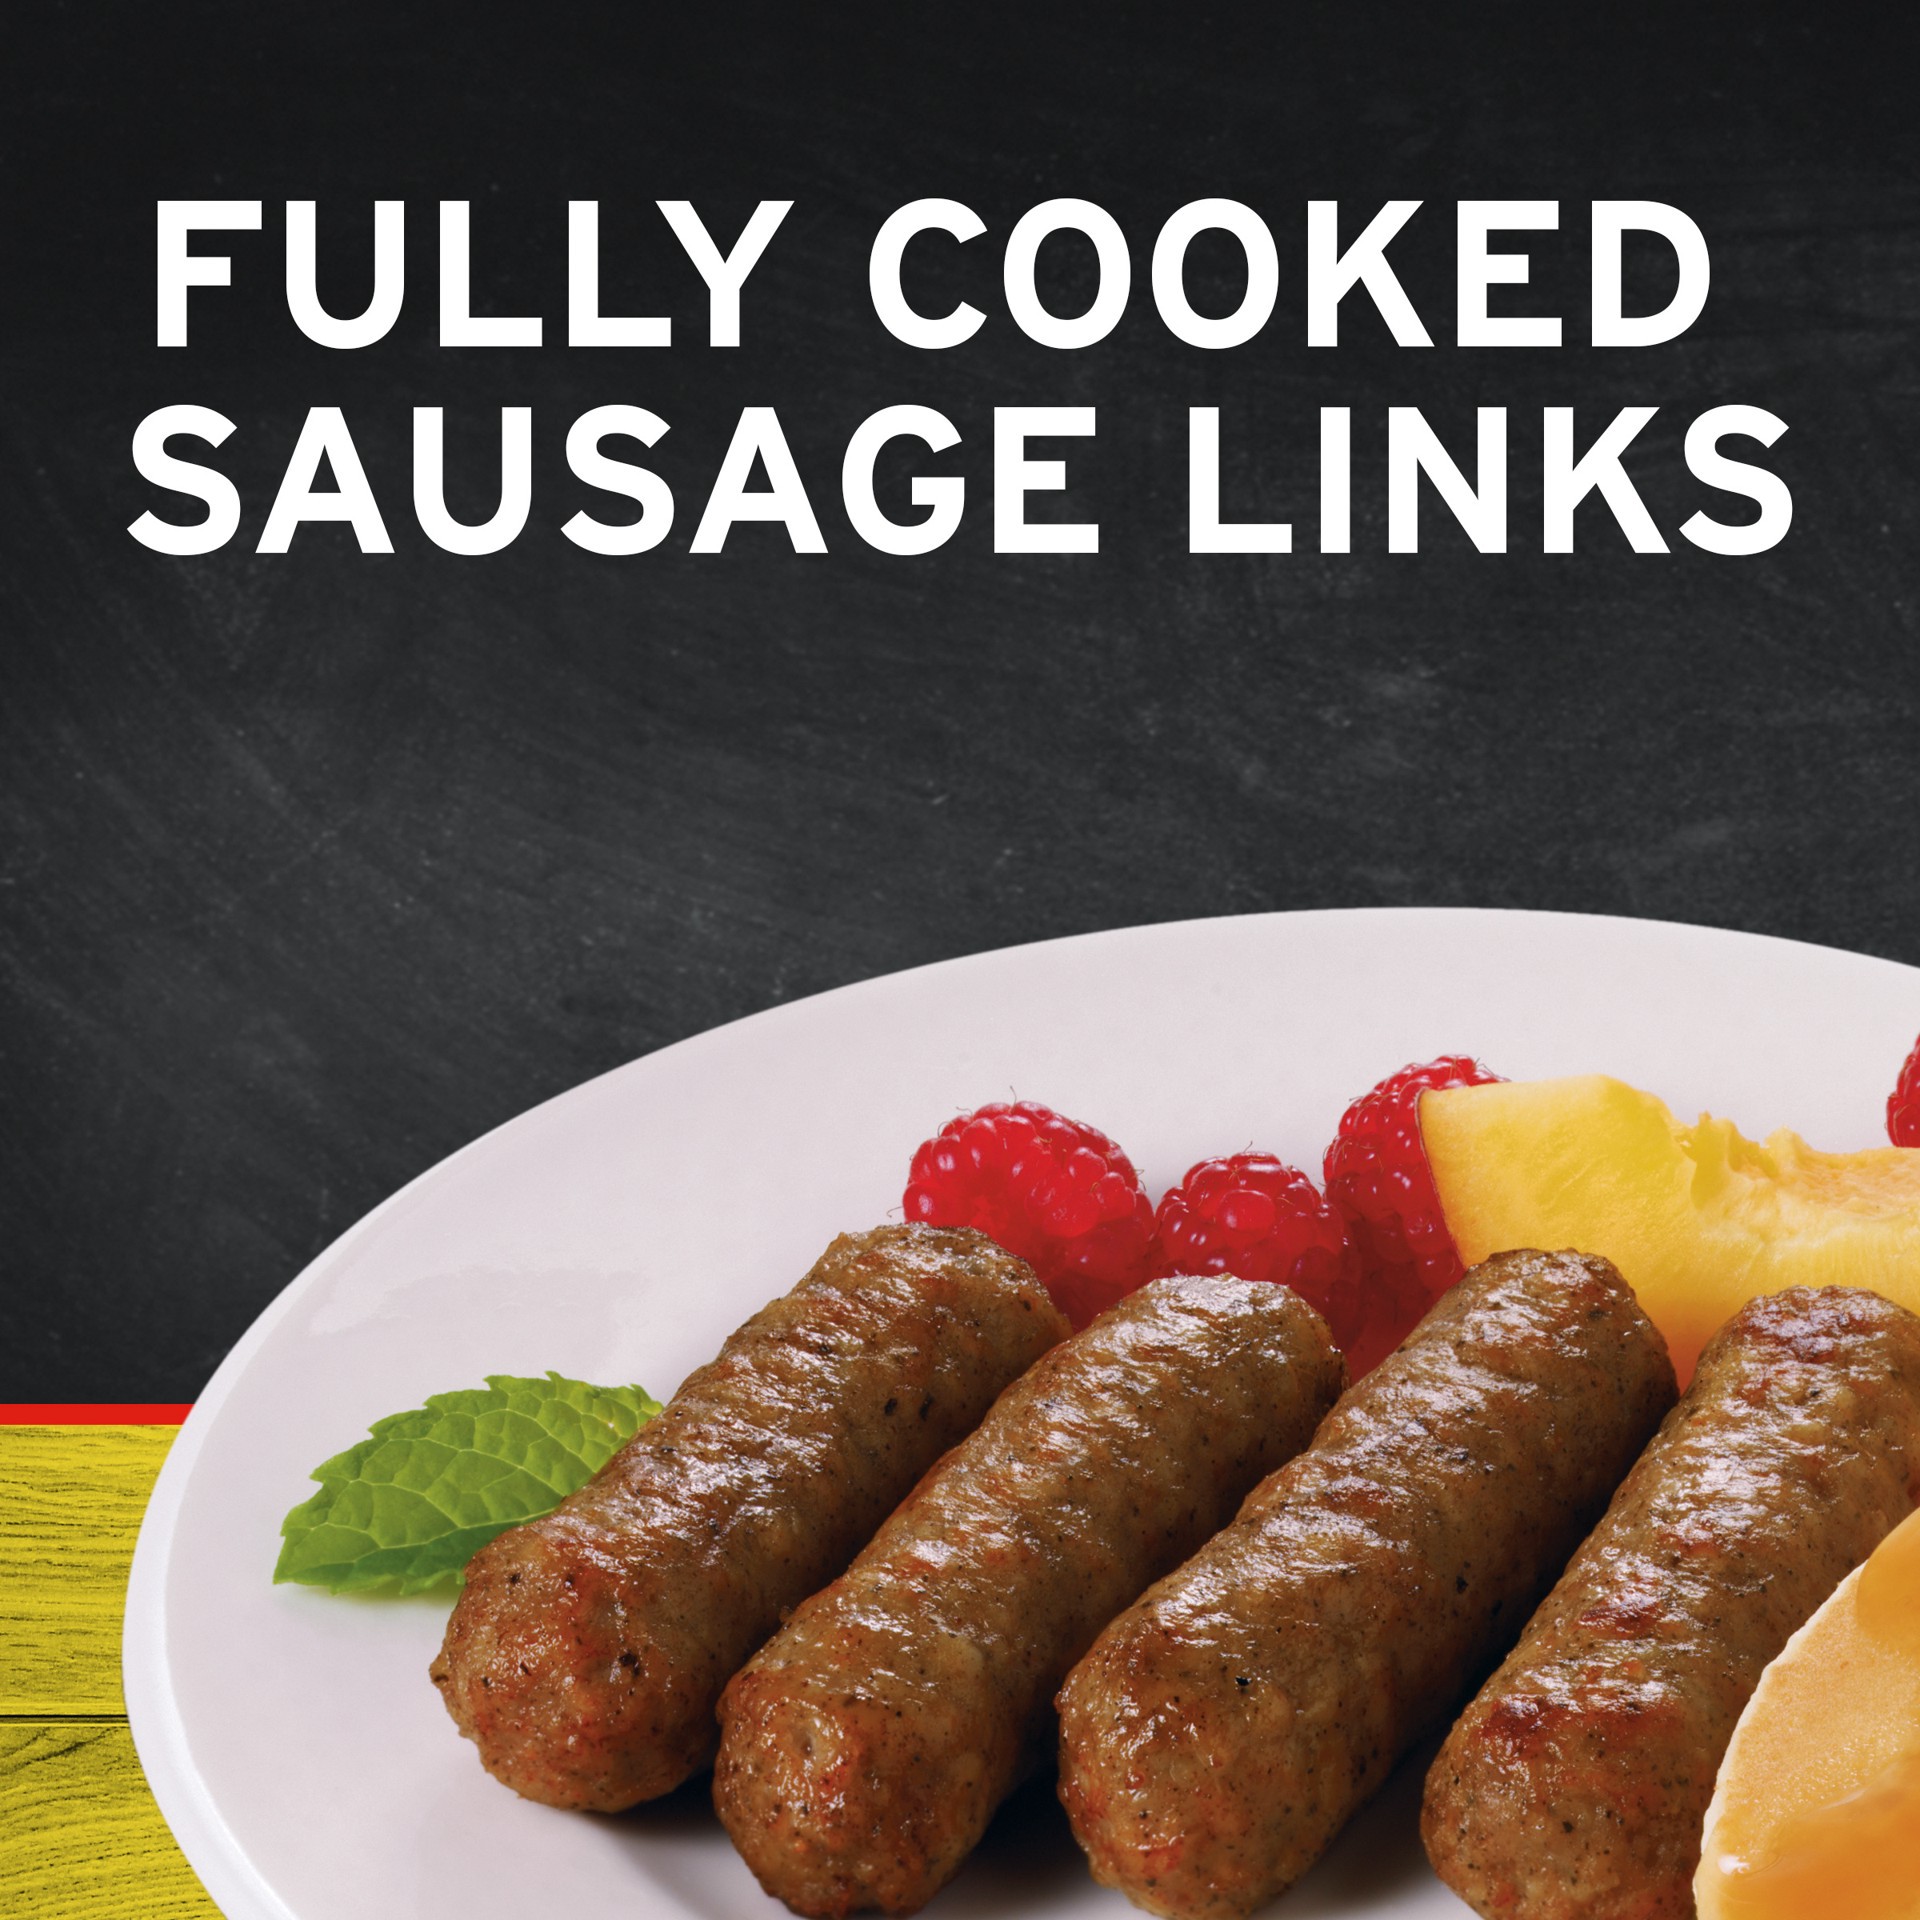 slide 3 of 5, Banquet Brown ‘N Serve Original Fully Cooked Sausage Links, Frozen Meat, 10 Count, 6.4 OZ, 6.4 oz